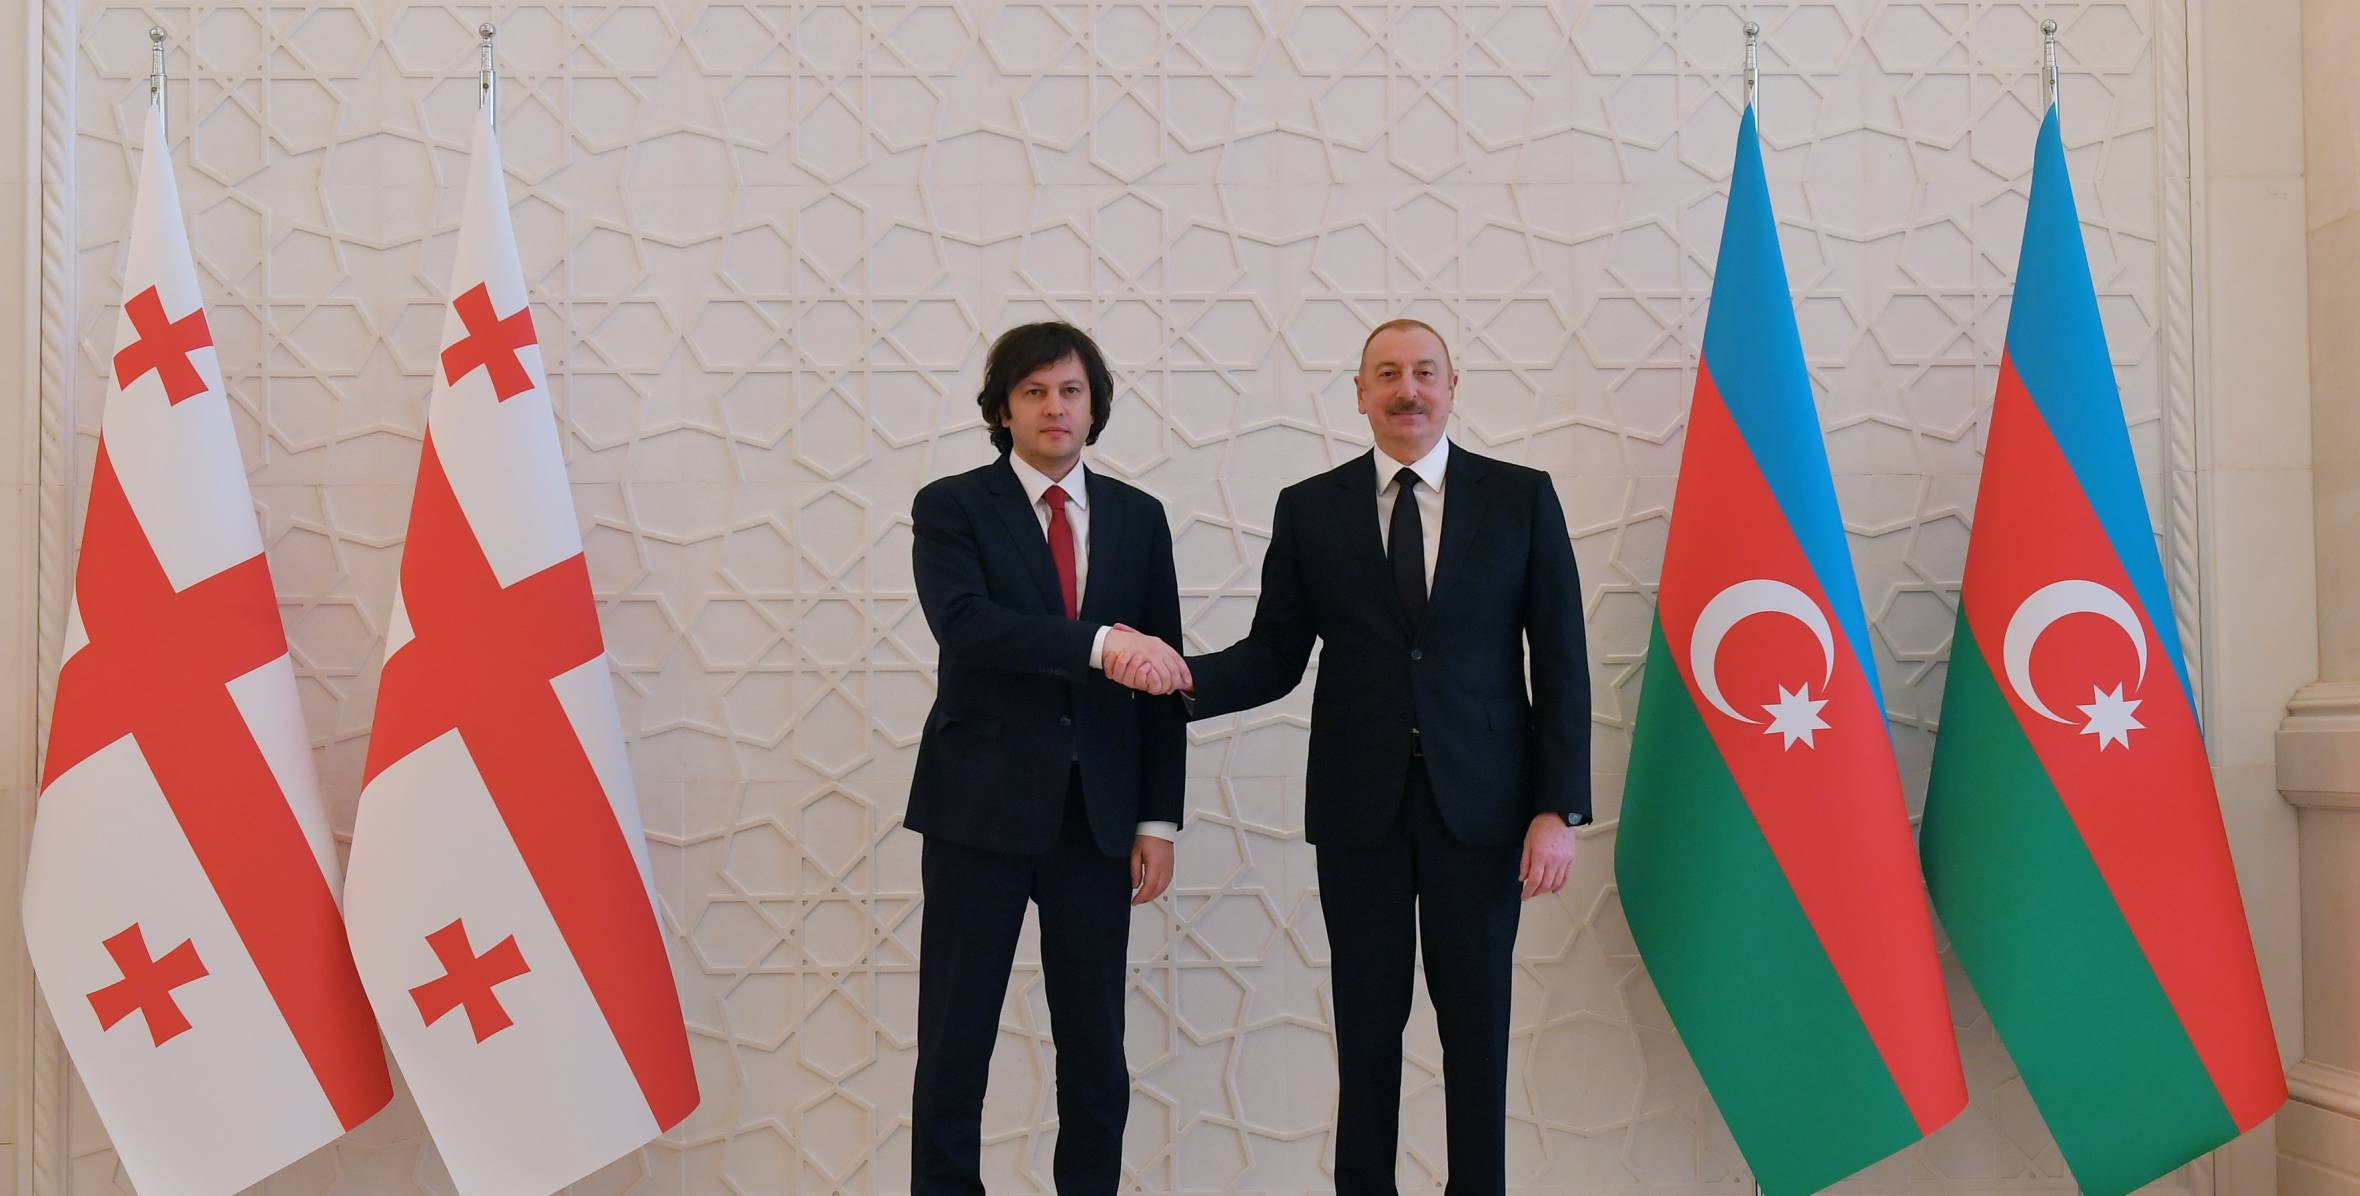 Ilham Aliyev held one-on-one meeting with Prime Minister of Georgia Irakli Kobakhidze